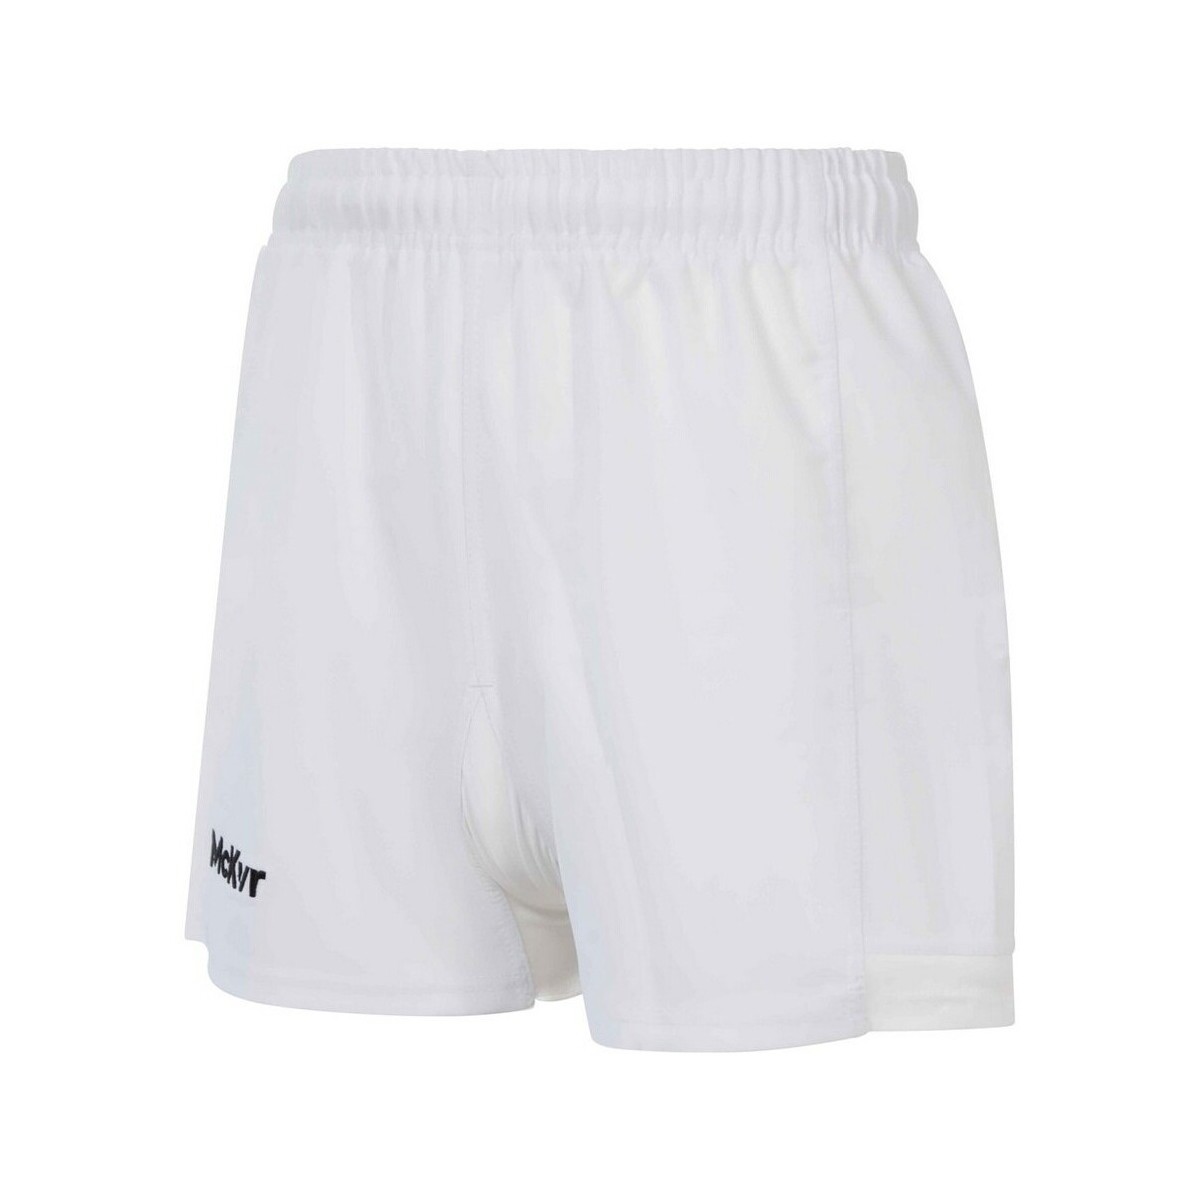 Vêtements Shorts / Bermudas Mckeever Core 22 Blanc